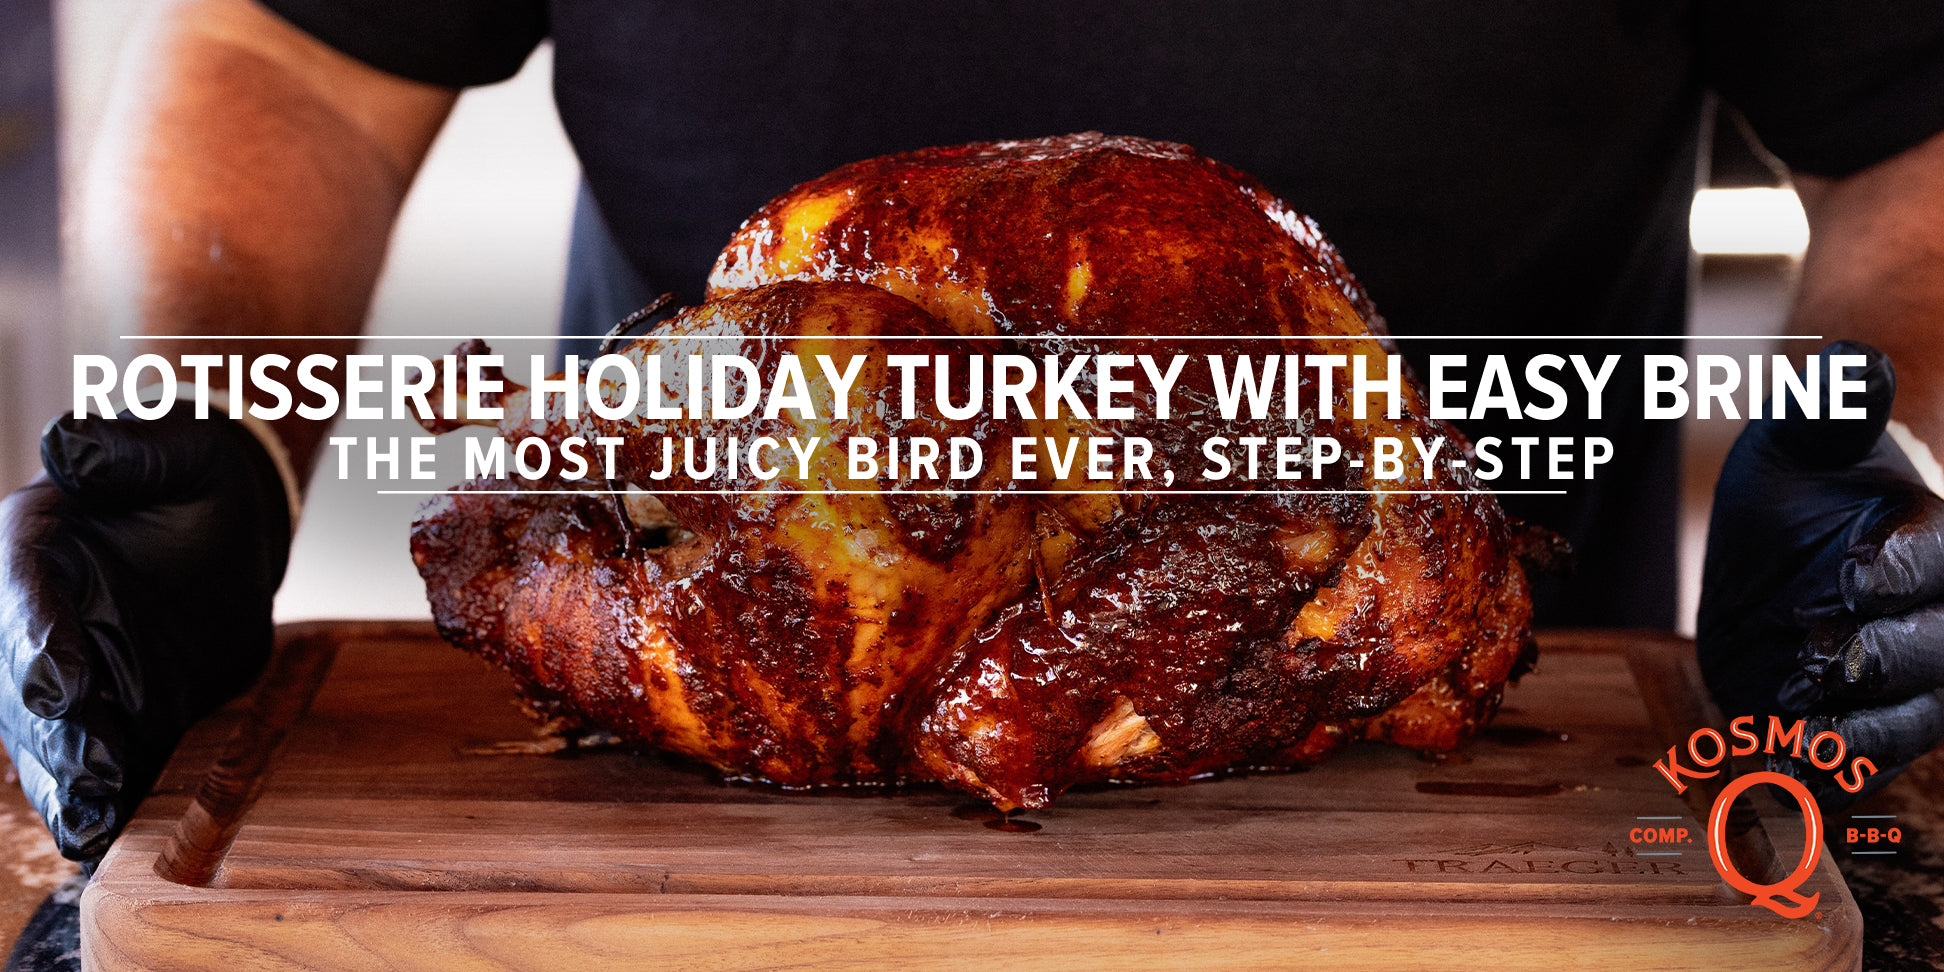 Easy Brined Rotisserie Holiday Turkey | SIMPLE STEPS